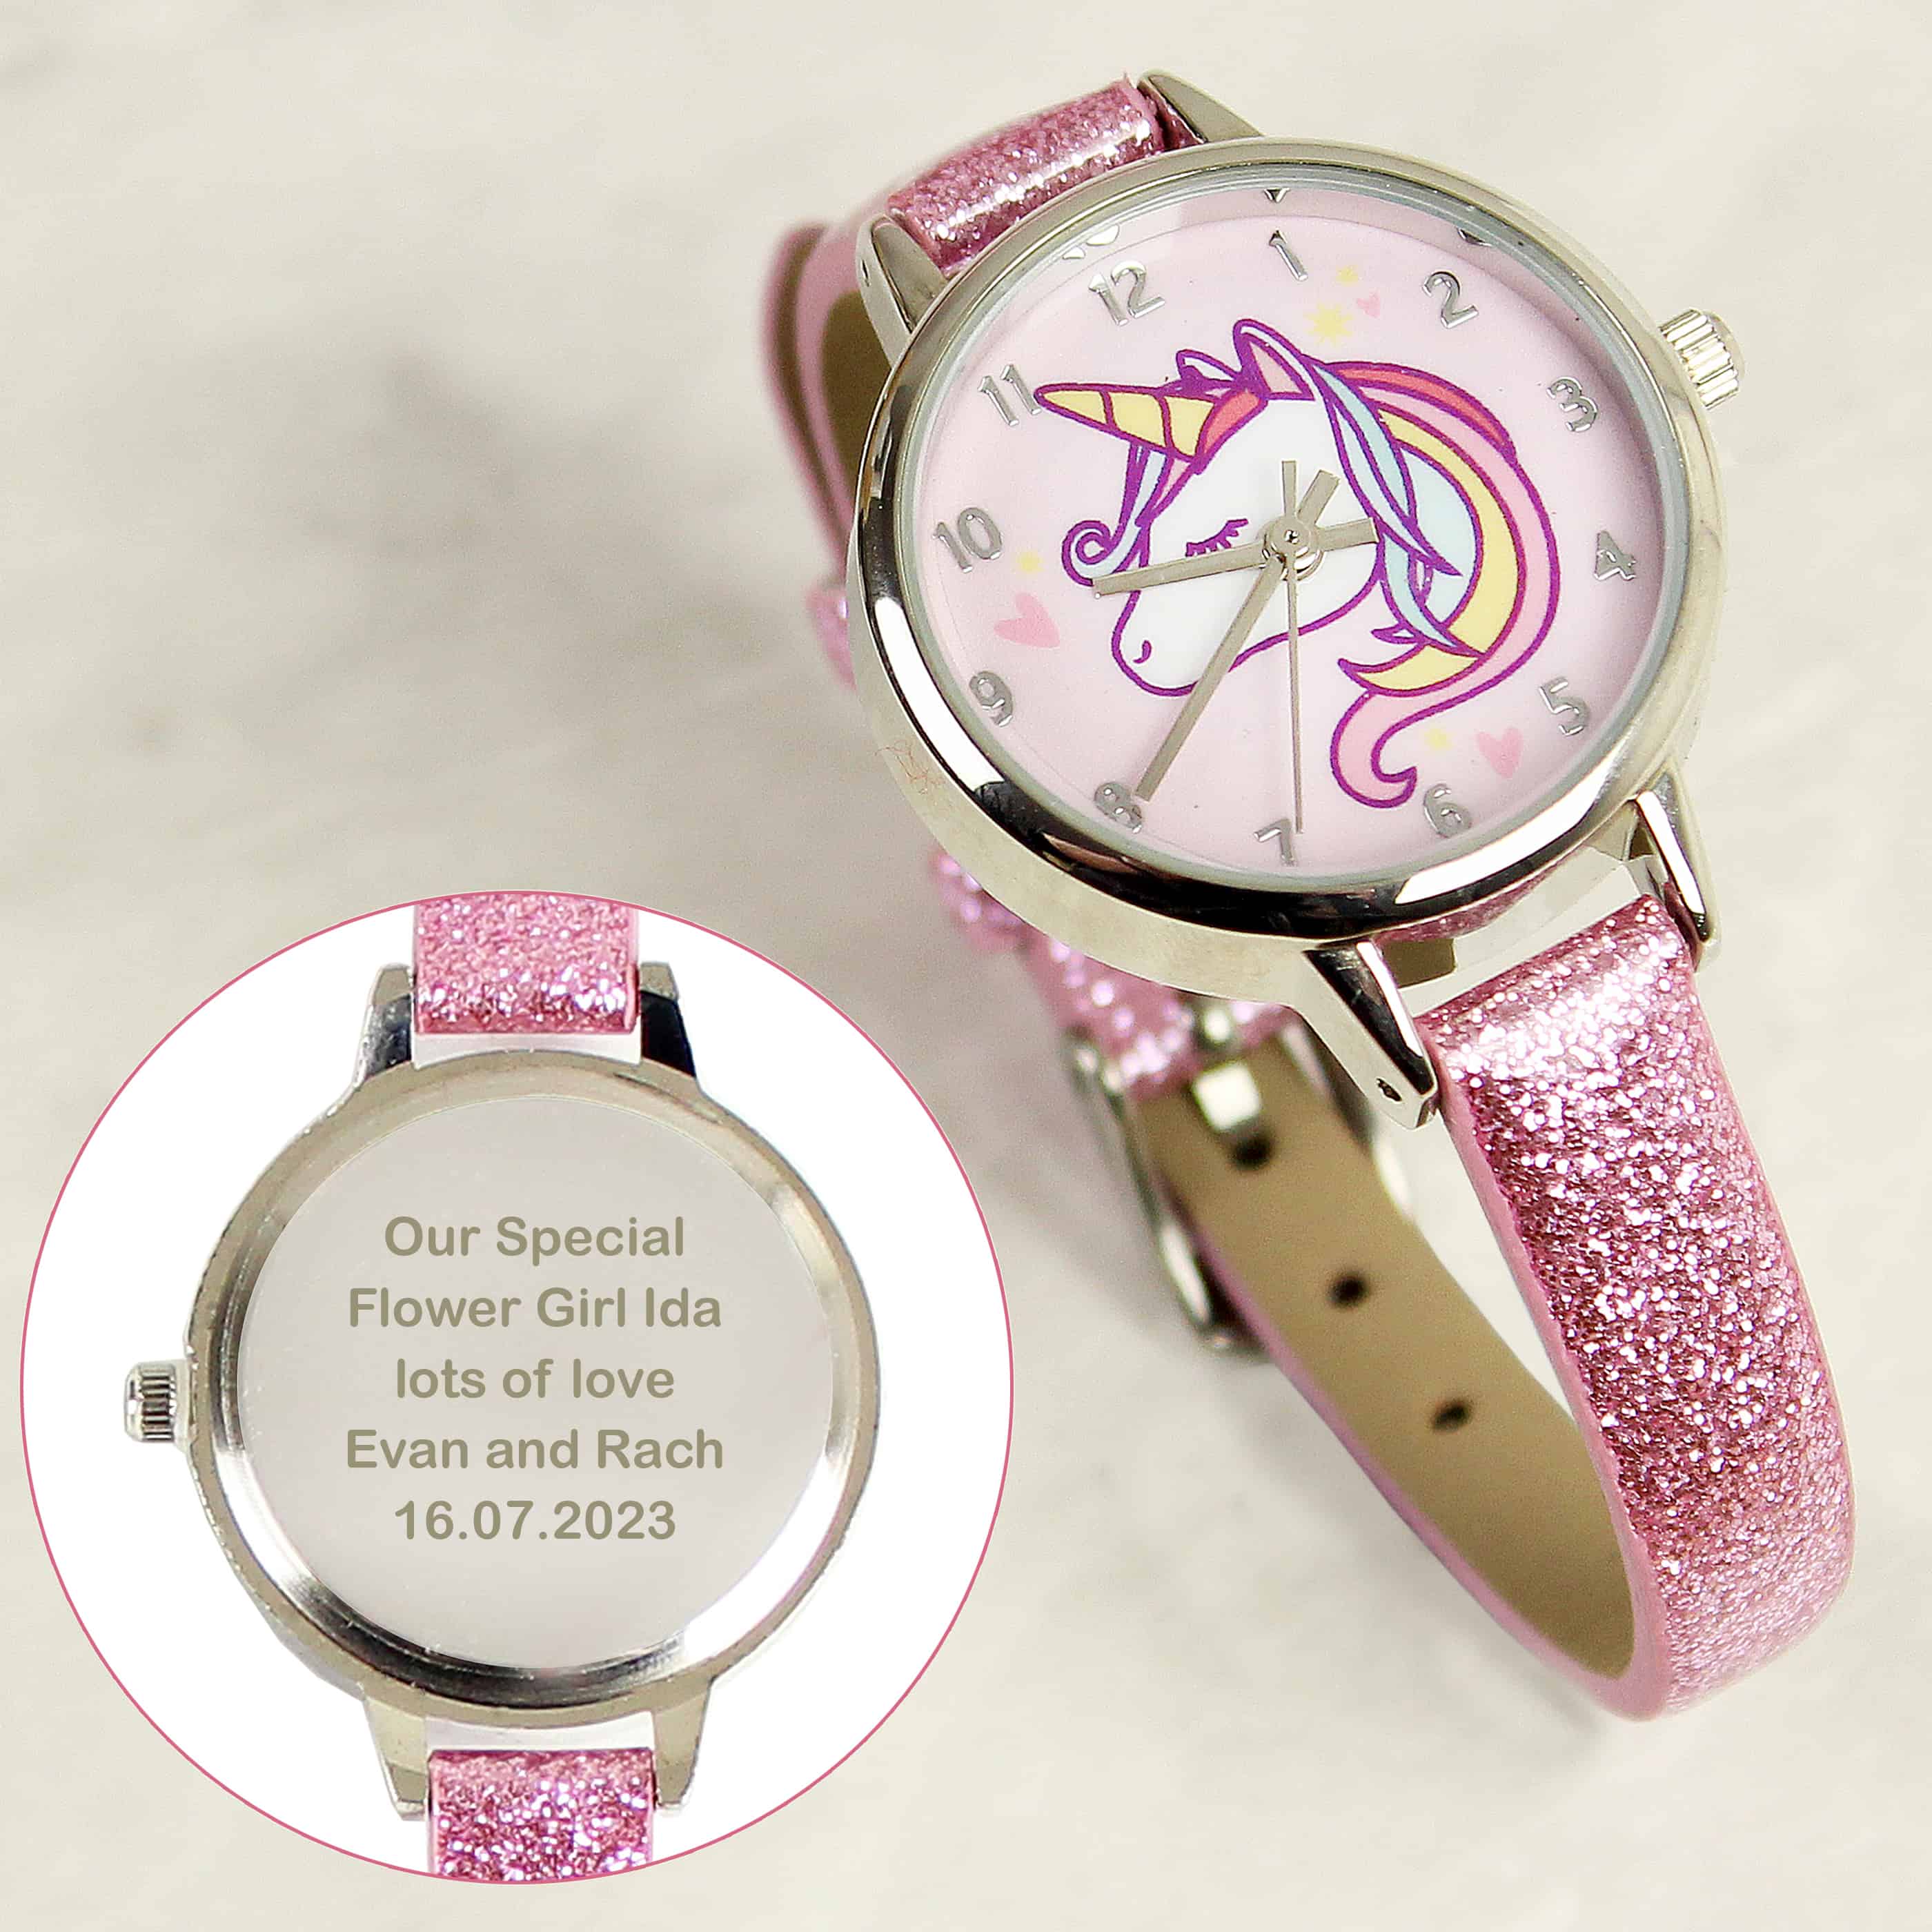 Personalised Unicorn with Pink Glitter Strap Watch